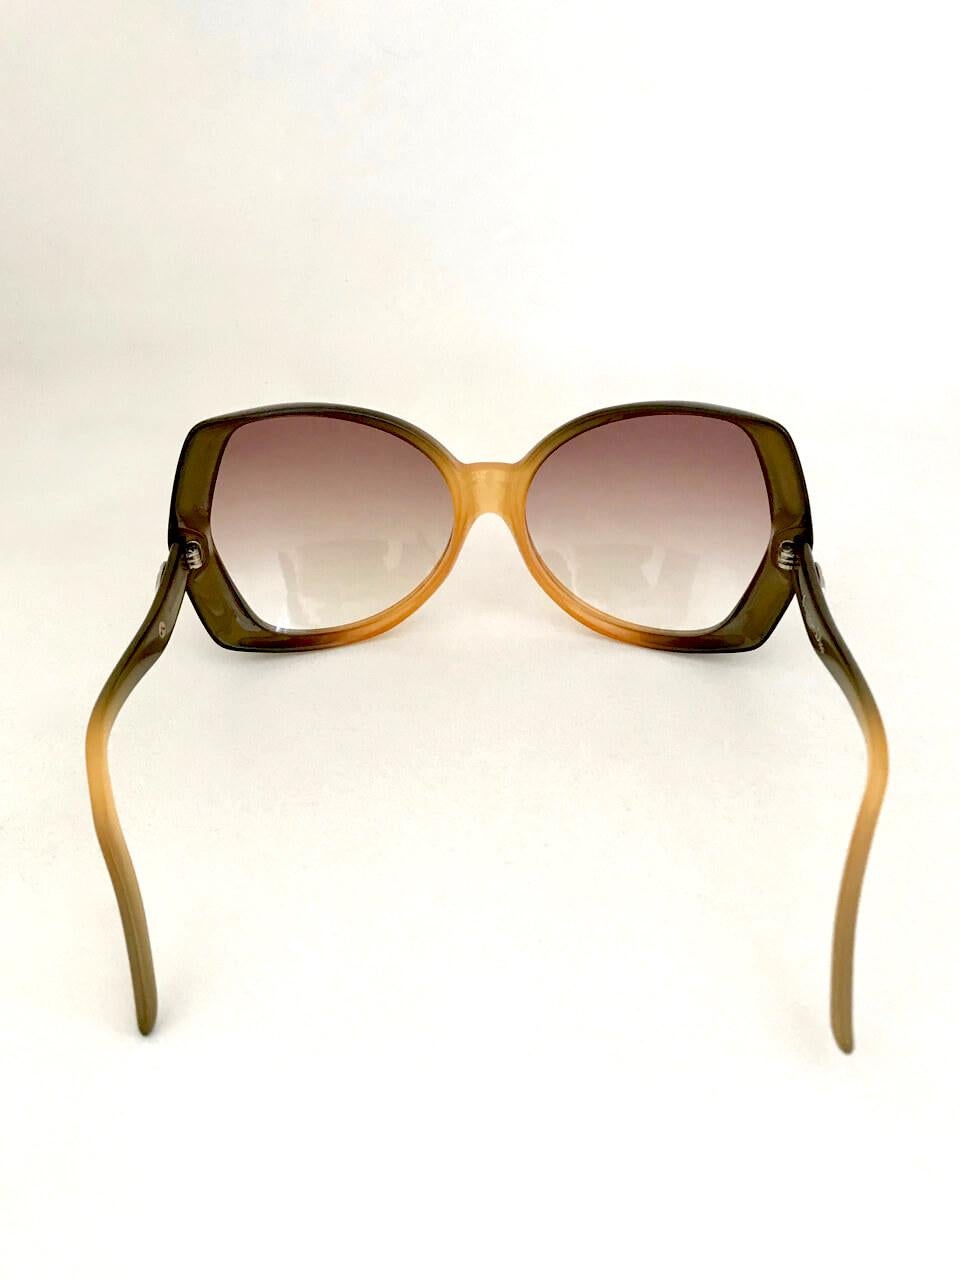 Christian Dior Model D06 Gradient Amber Khaki Oversized Sunglasses, 1970s In Excellent Condition For Sale In Munich, DE